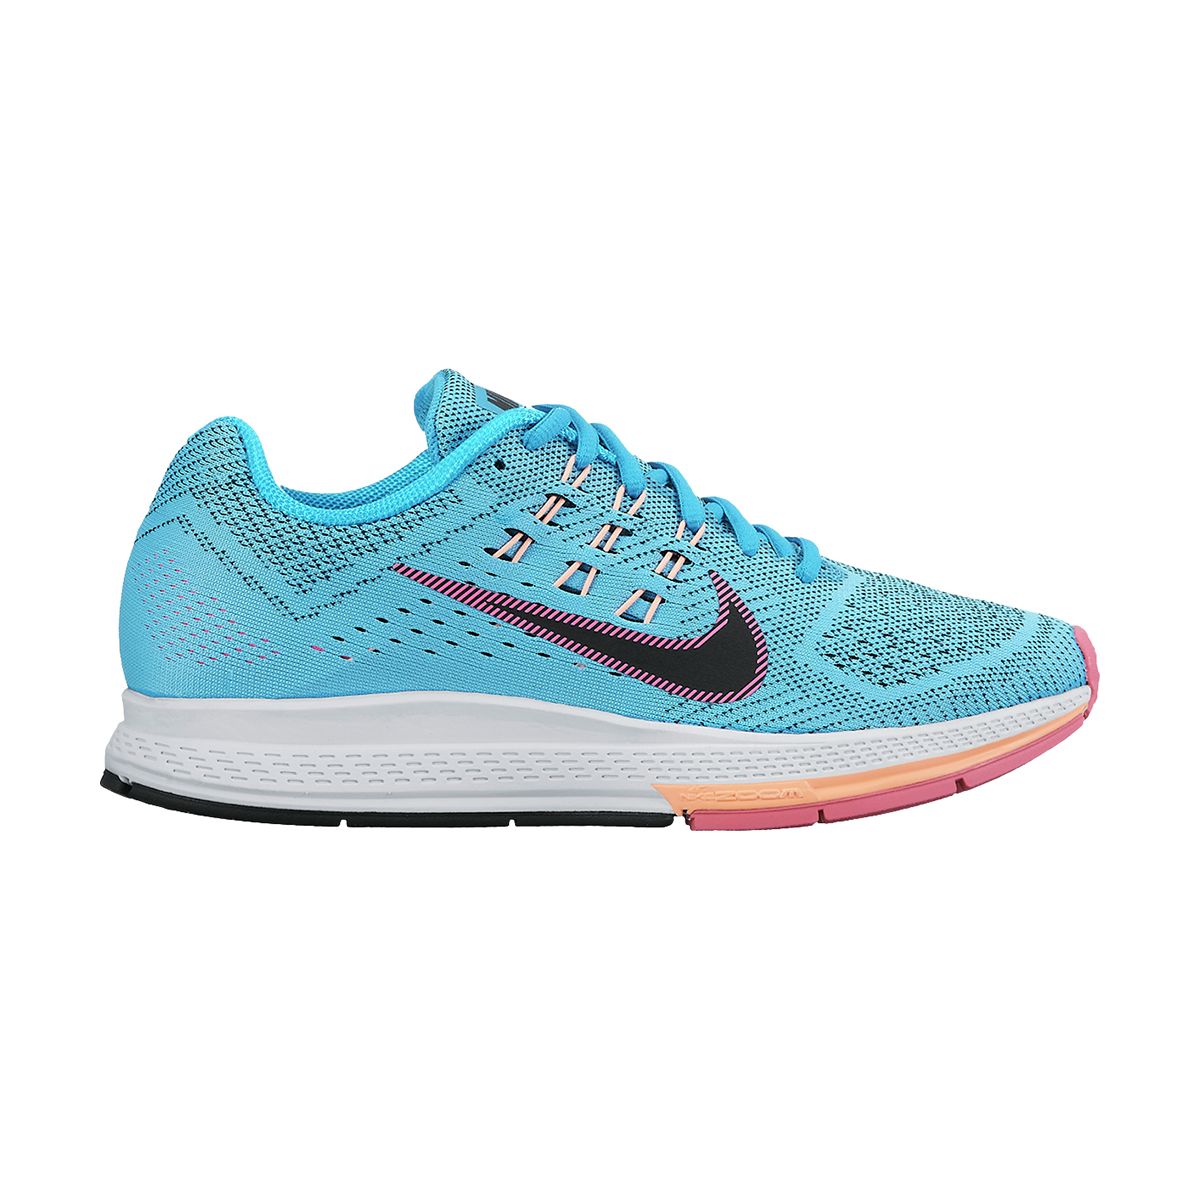 Nike Air Zoom Structure 18 Running Shoe - Women's - Footwear